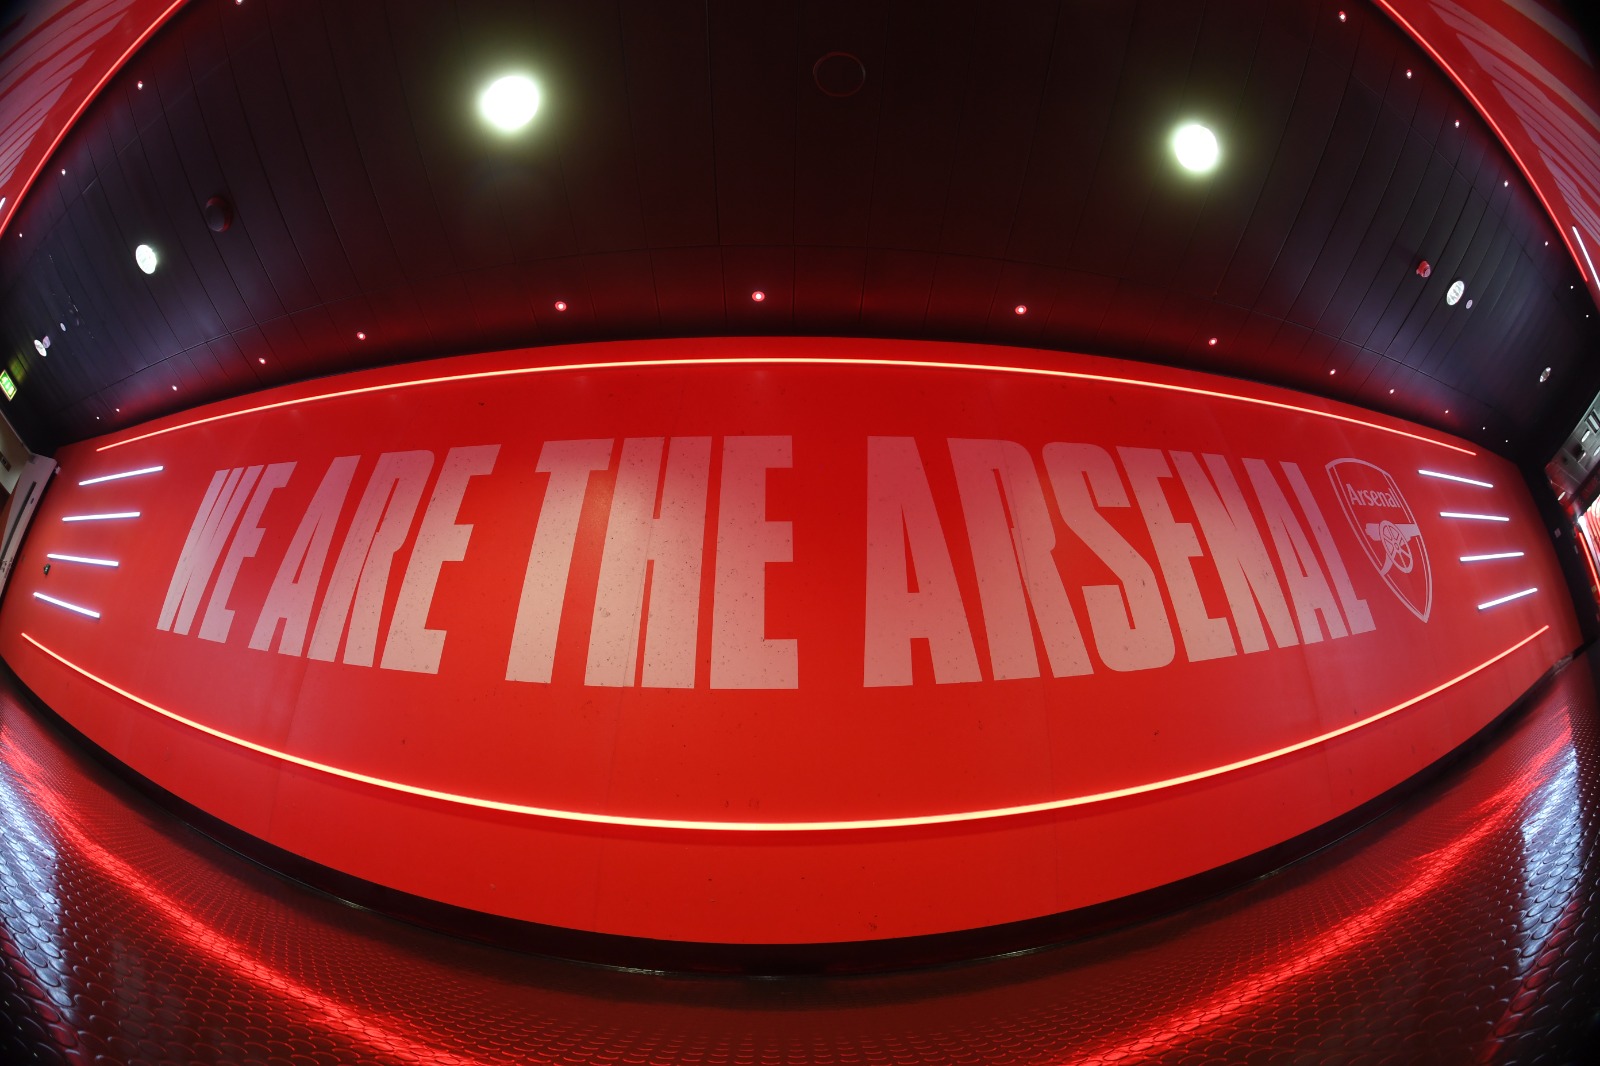 We Love You Arsenal!